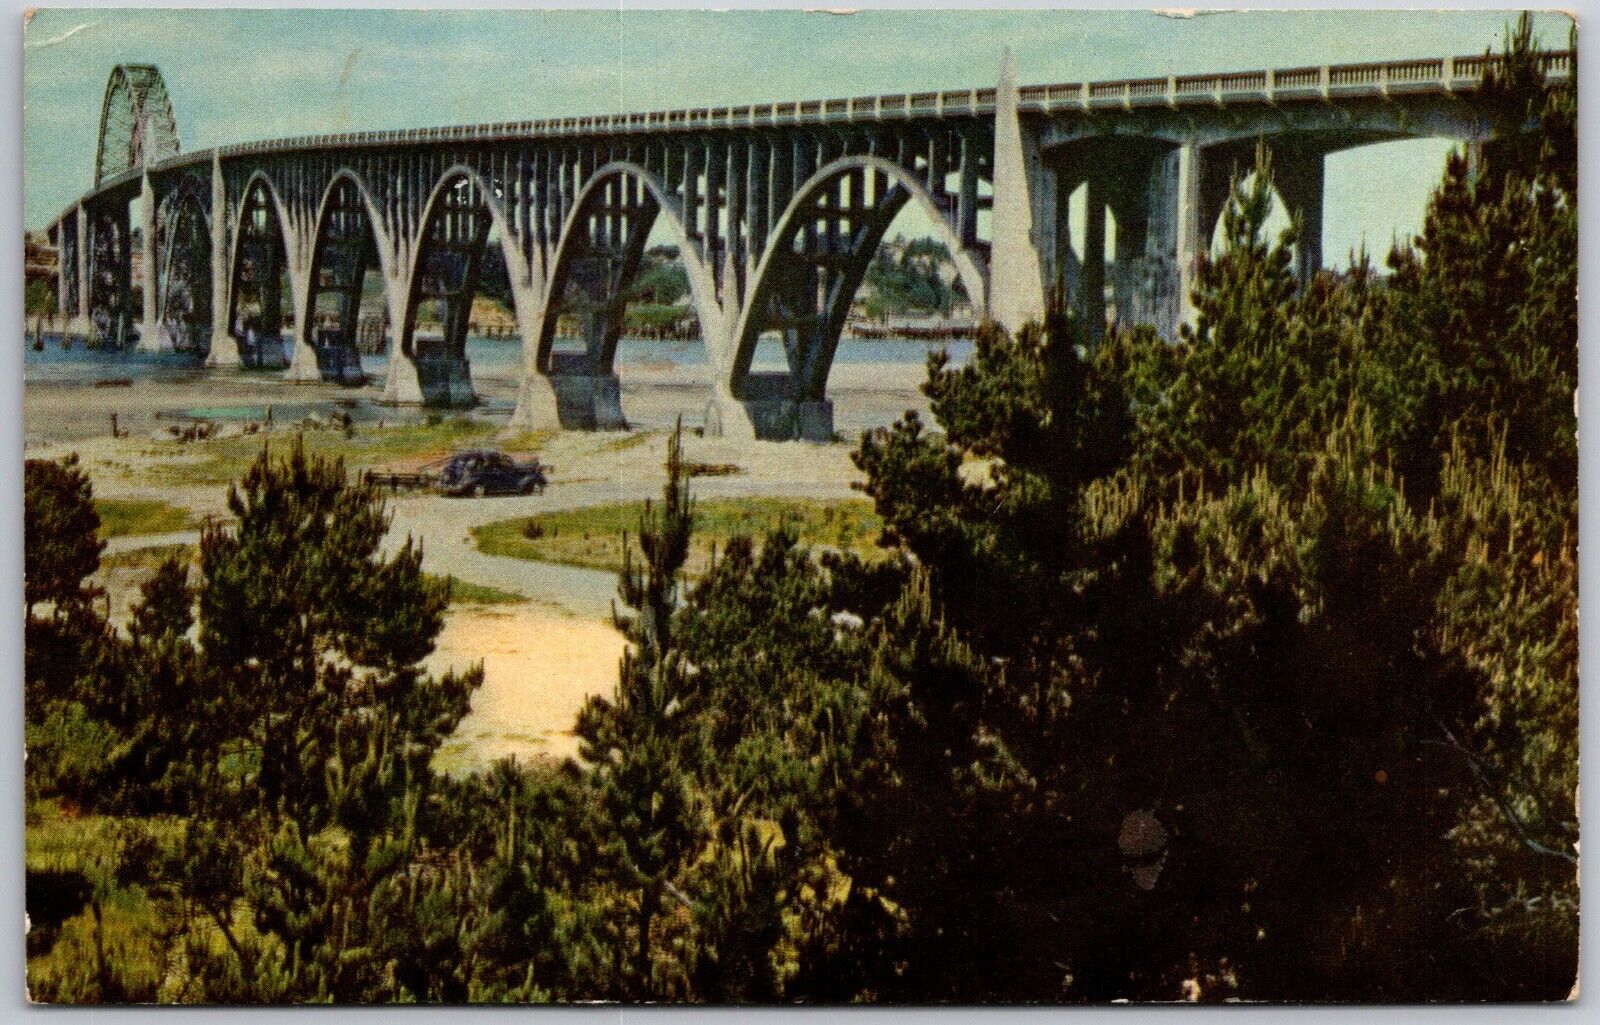 Newport OR Yaquina Bay Bridge Highway 101 Union Oil 76 Gasoline Postcard oregon